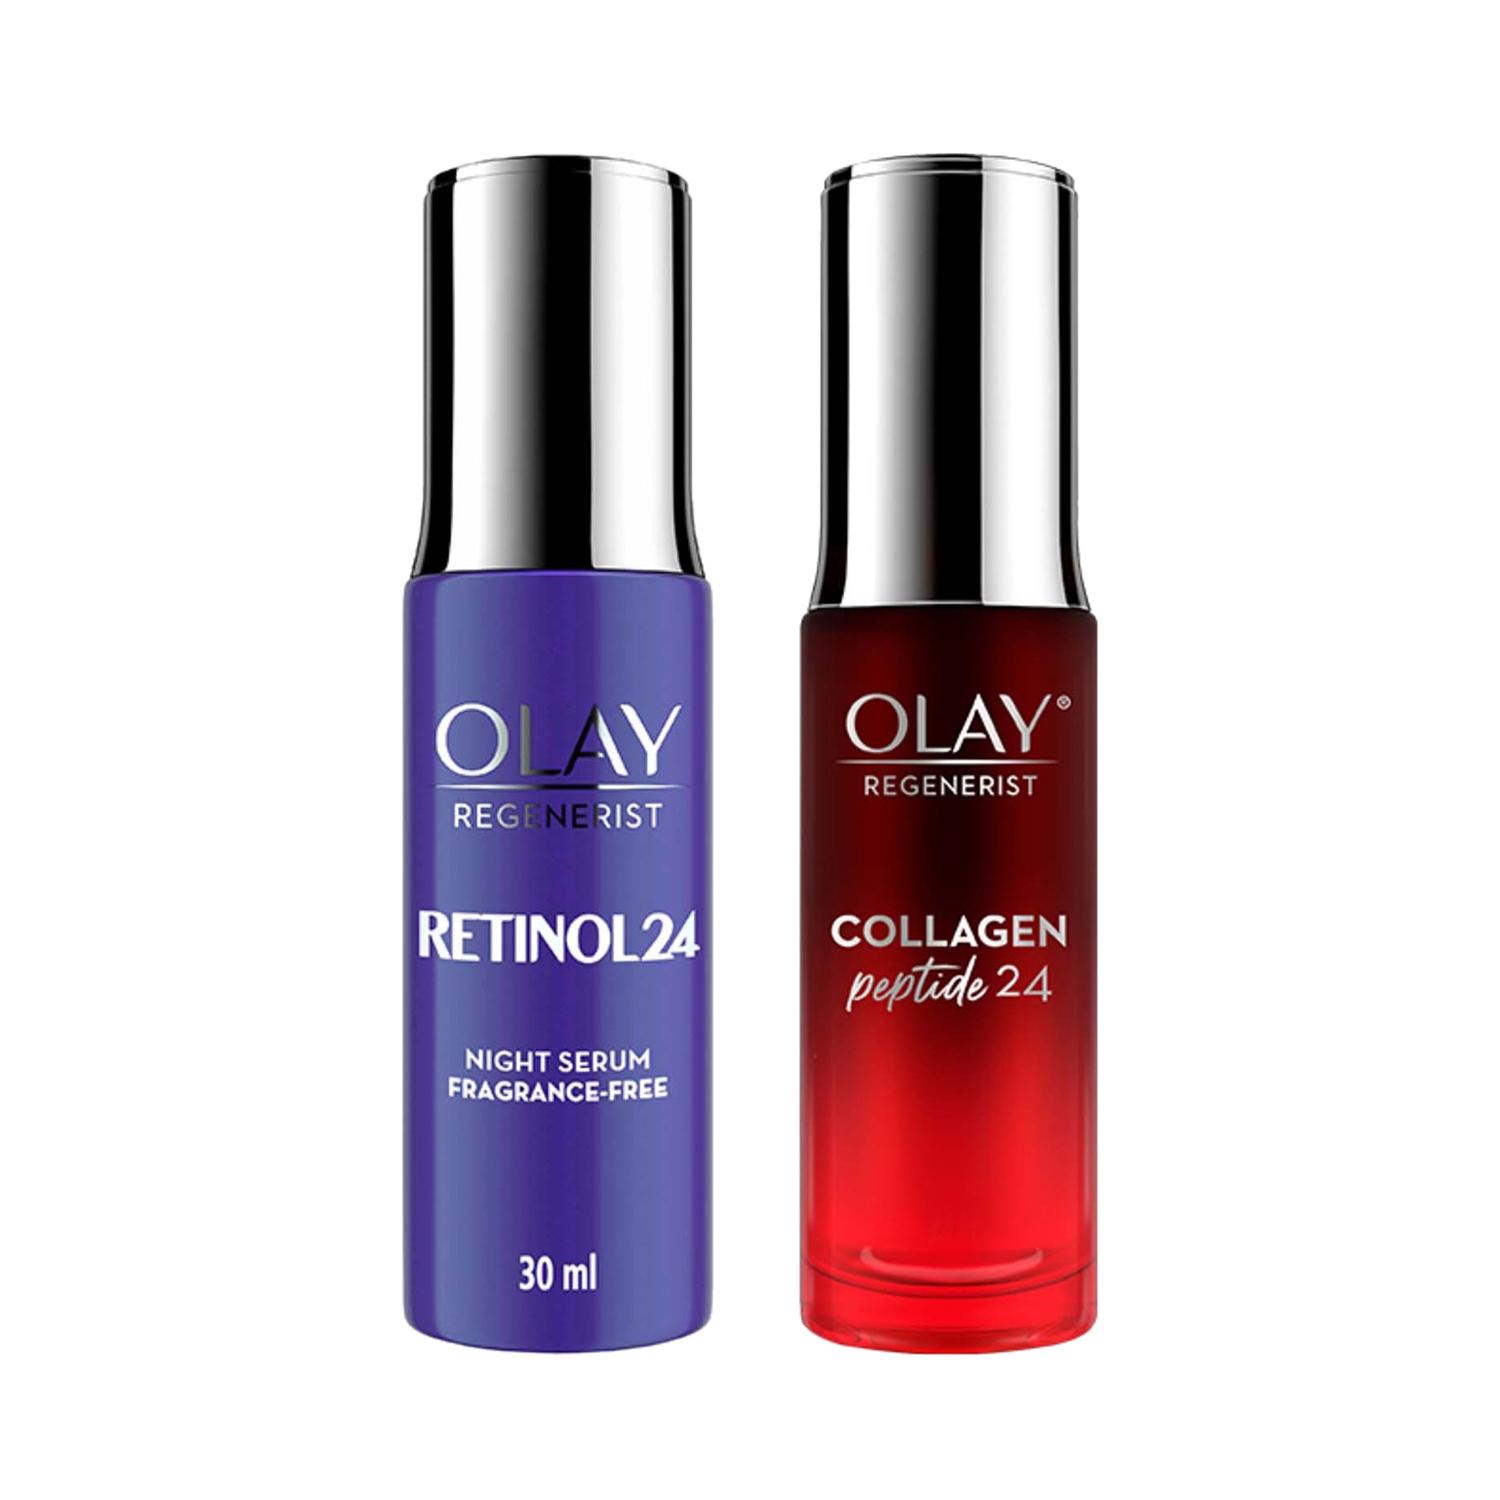 Olay Retinol Night Serum (30ml) And Olay Regenerist Collagen Peptide 24 Face Serum (30ml) Combo